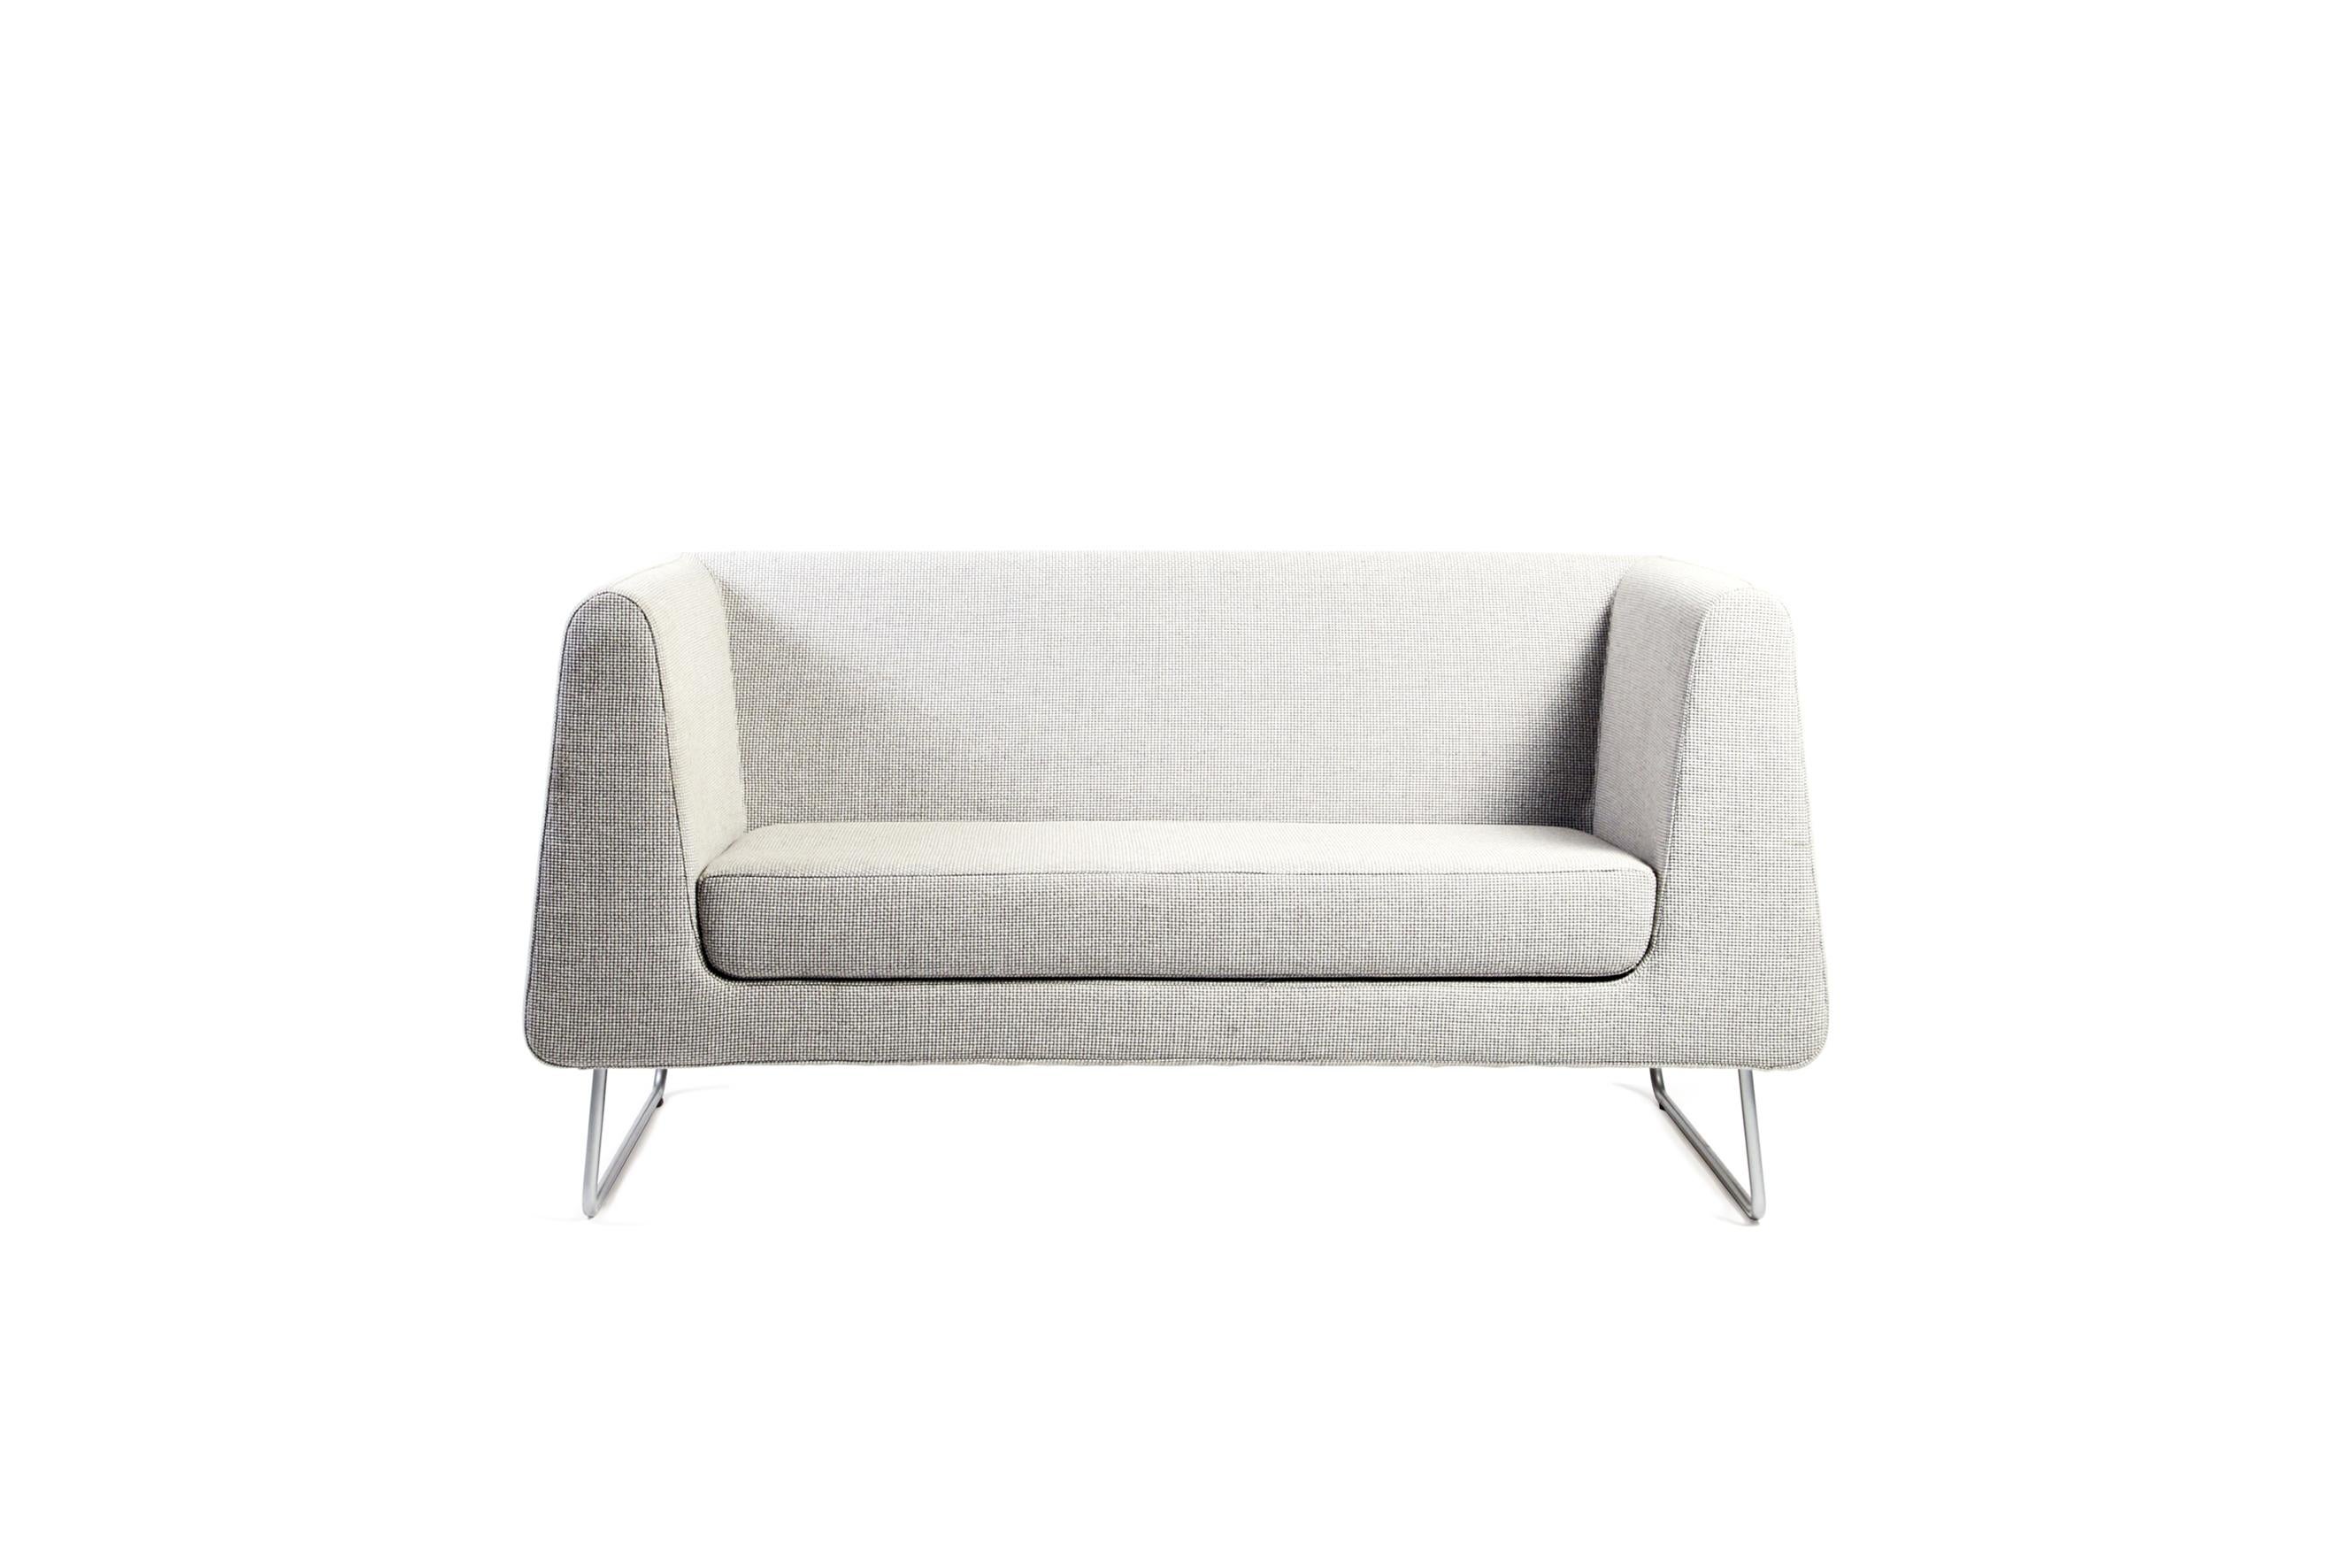 Inno Jarman Lounge Chair Designed by Steinar Hindenes 1